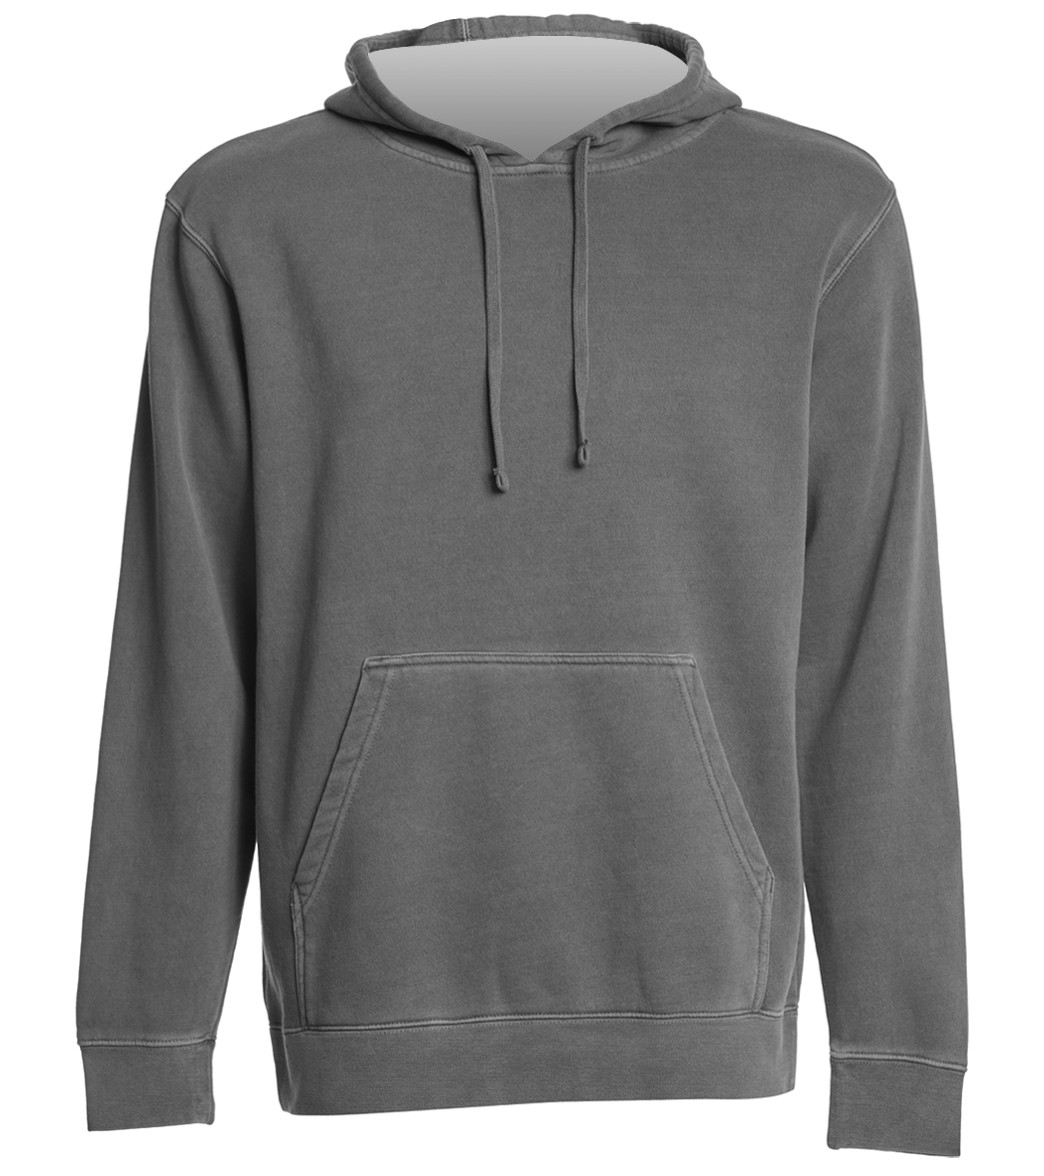 Men's Midweight Pigment Dyed Hooded Sweatshirt - Black Medium Cotton/Polyester - Swimoutlet.com